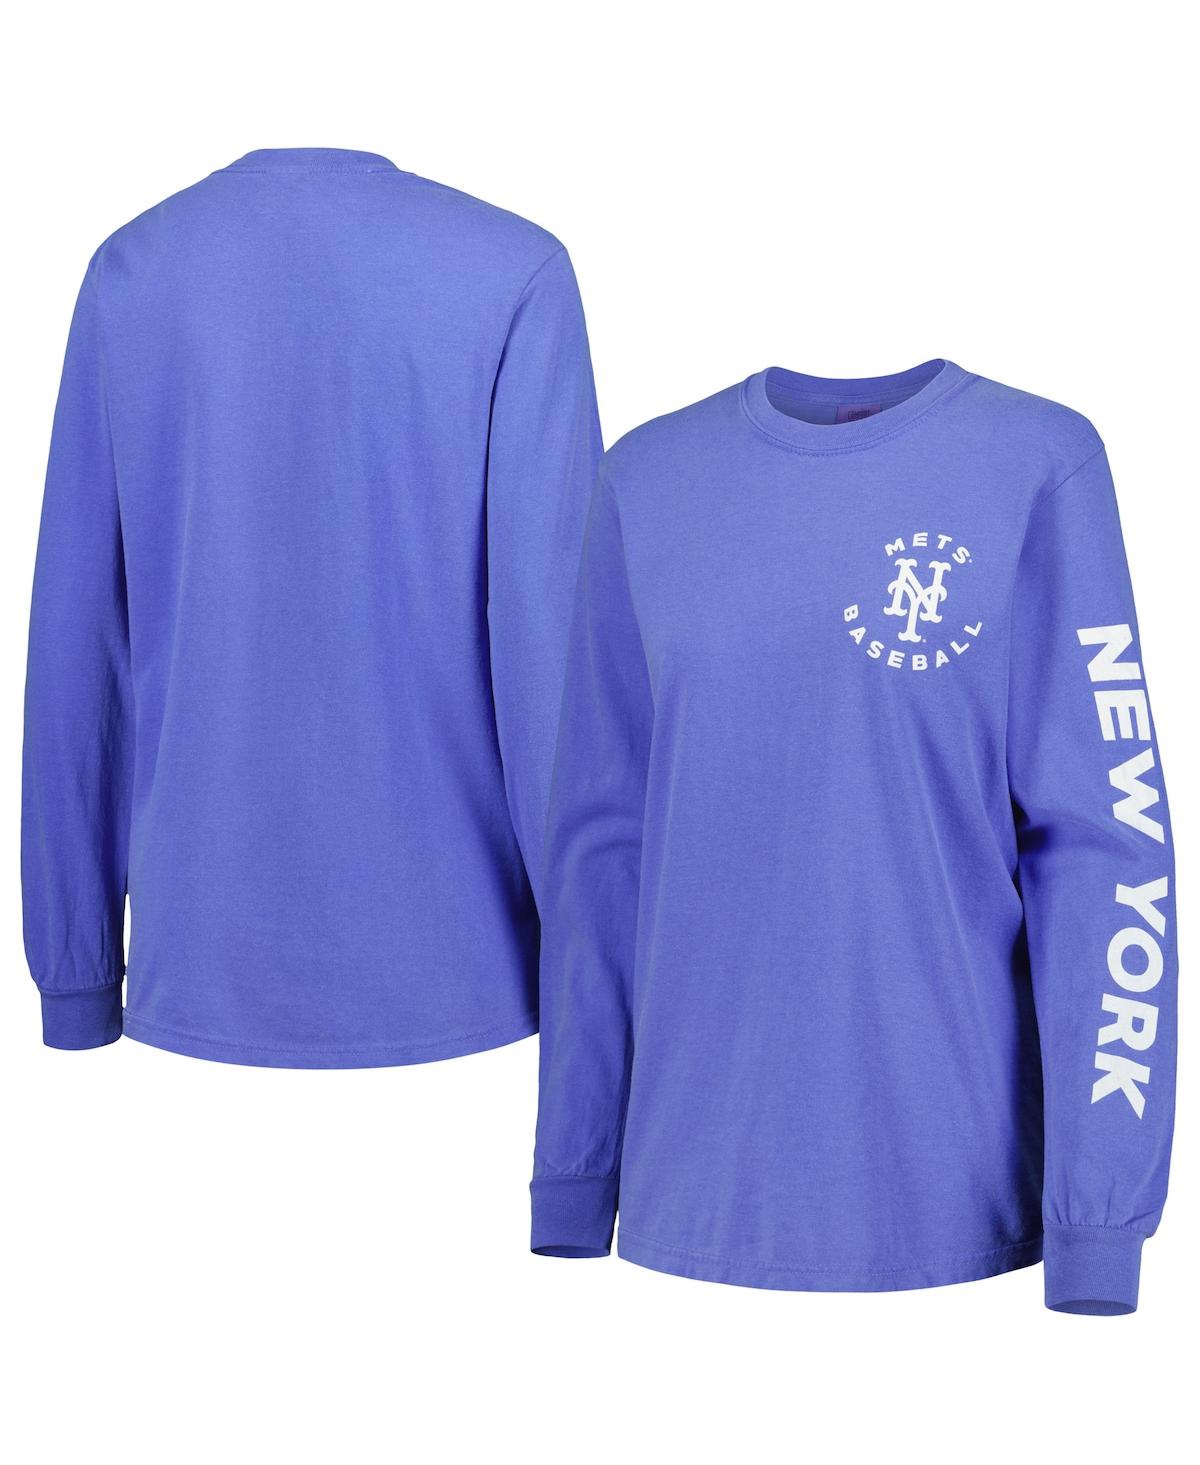 Women's Soft As A Grape Royal New York Mets Team Pigment Dye Long Sleeve T-shirt - Royal